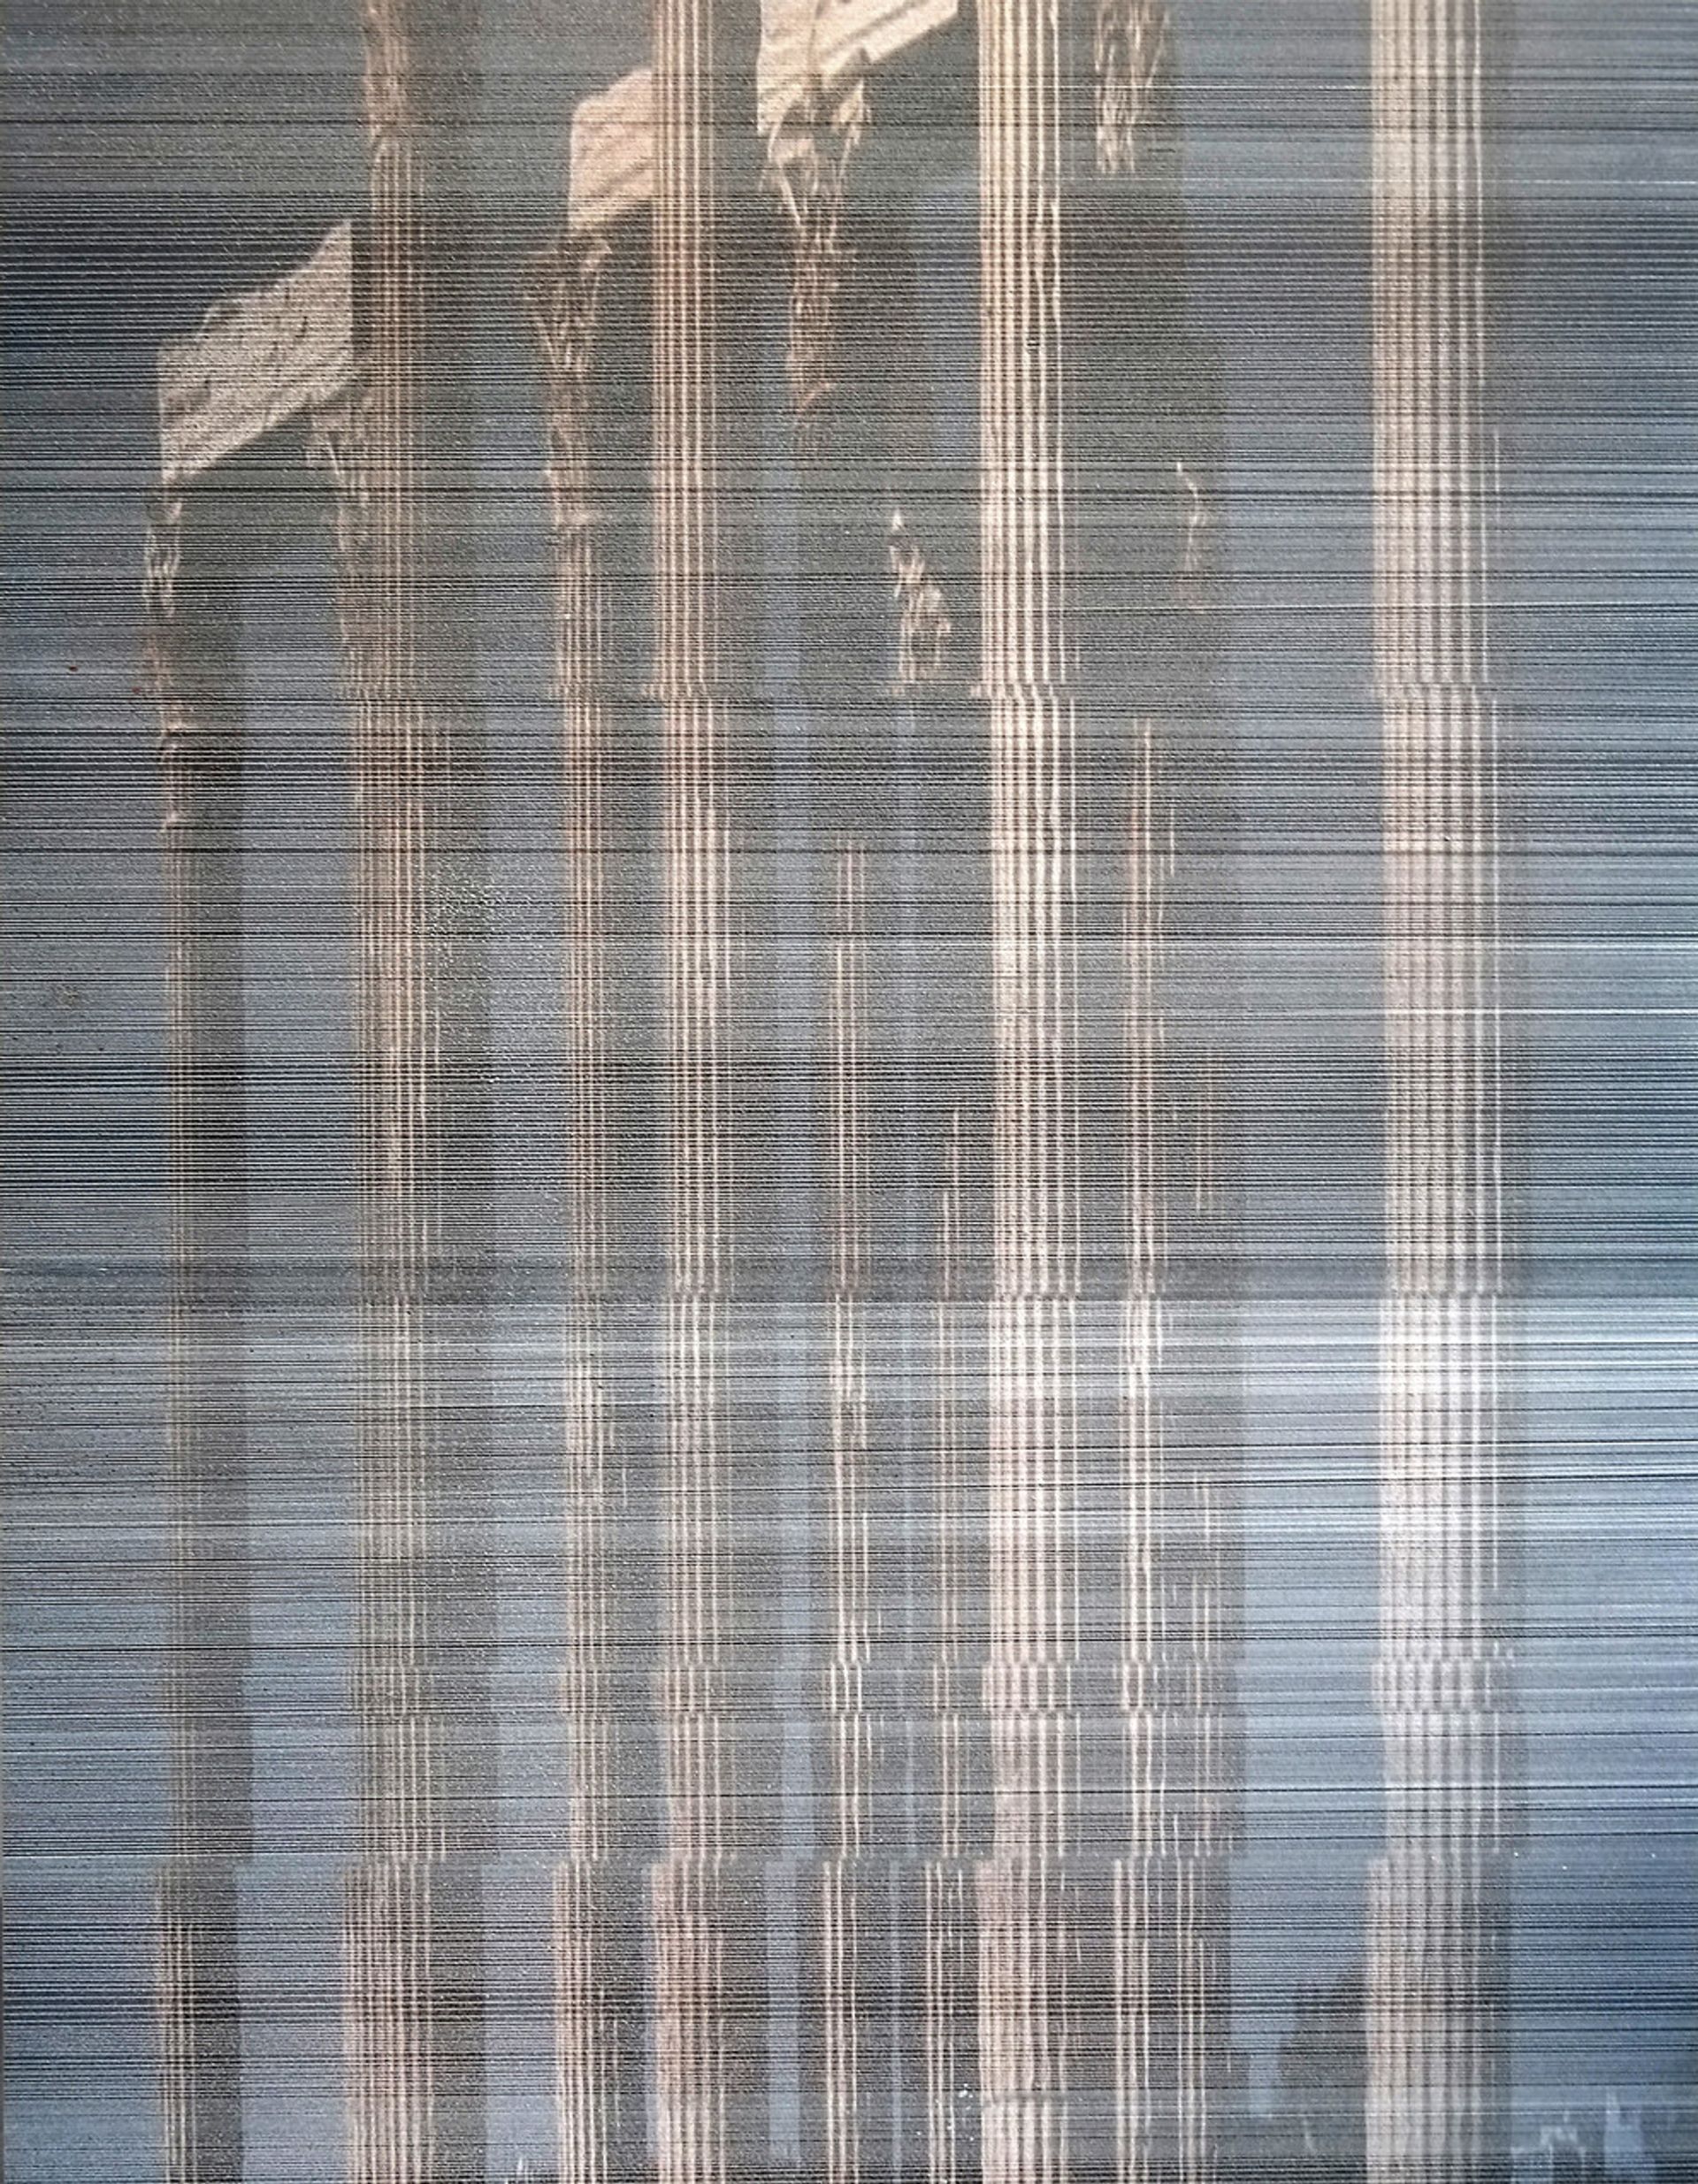 Temple XI, , Pigment print, varnish, scratched, 80 × 60 cm, 2018